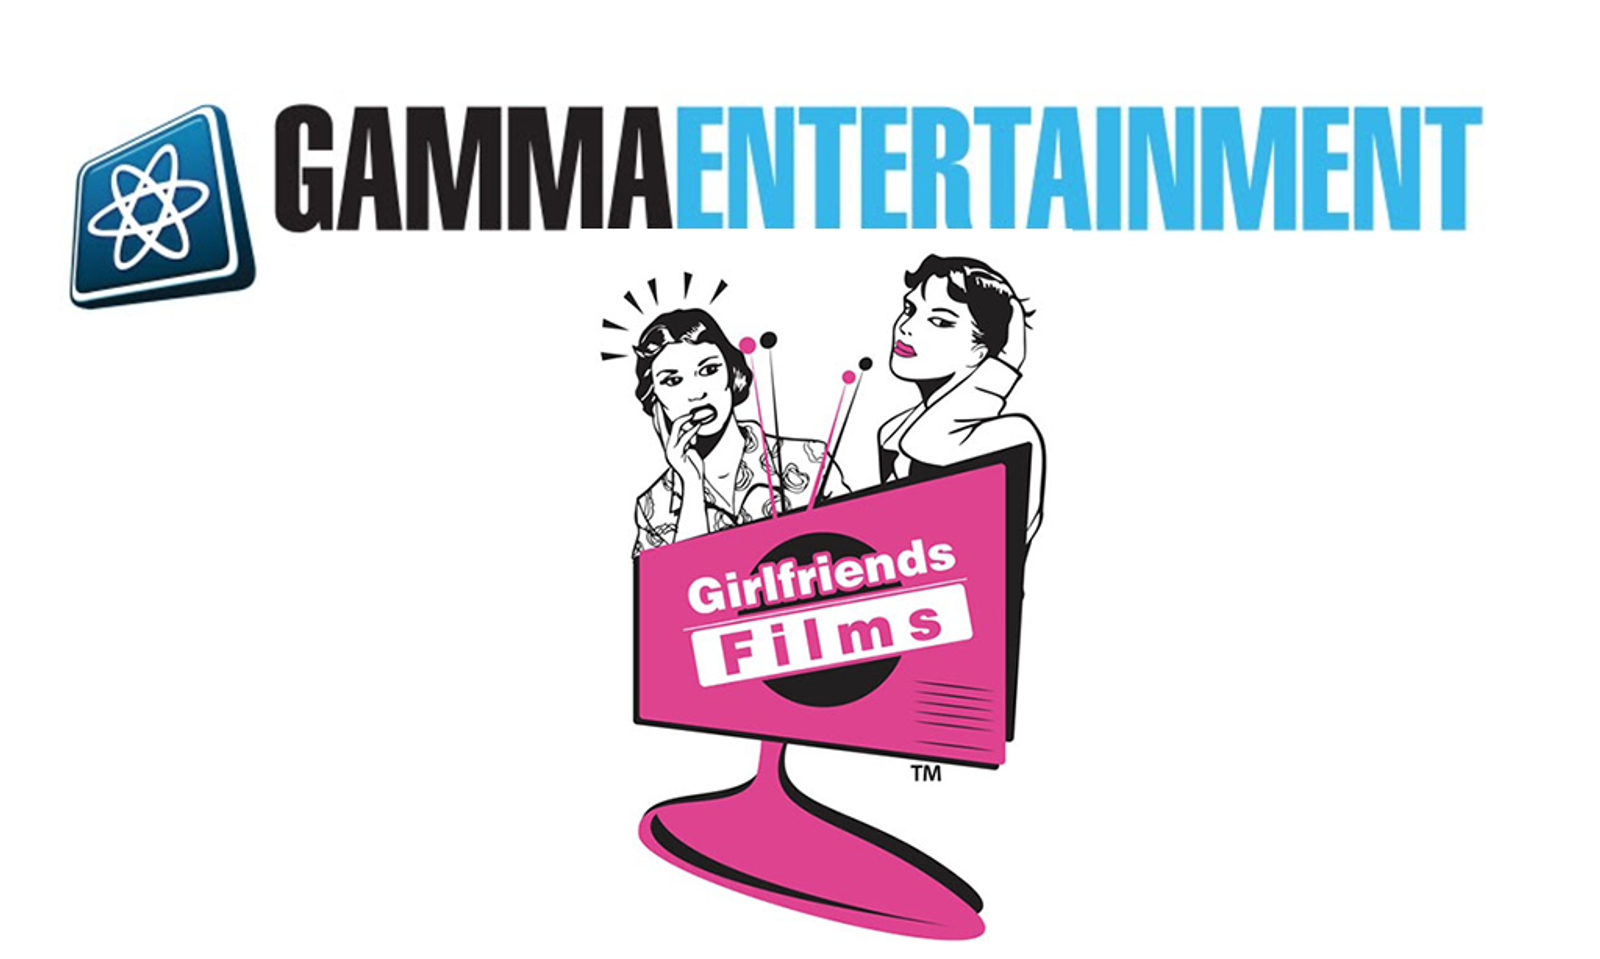 GirlfriendsFilms.com Is Now Offering Content in 4K Through Gamma